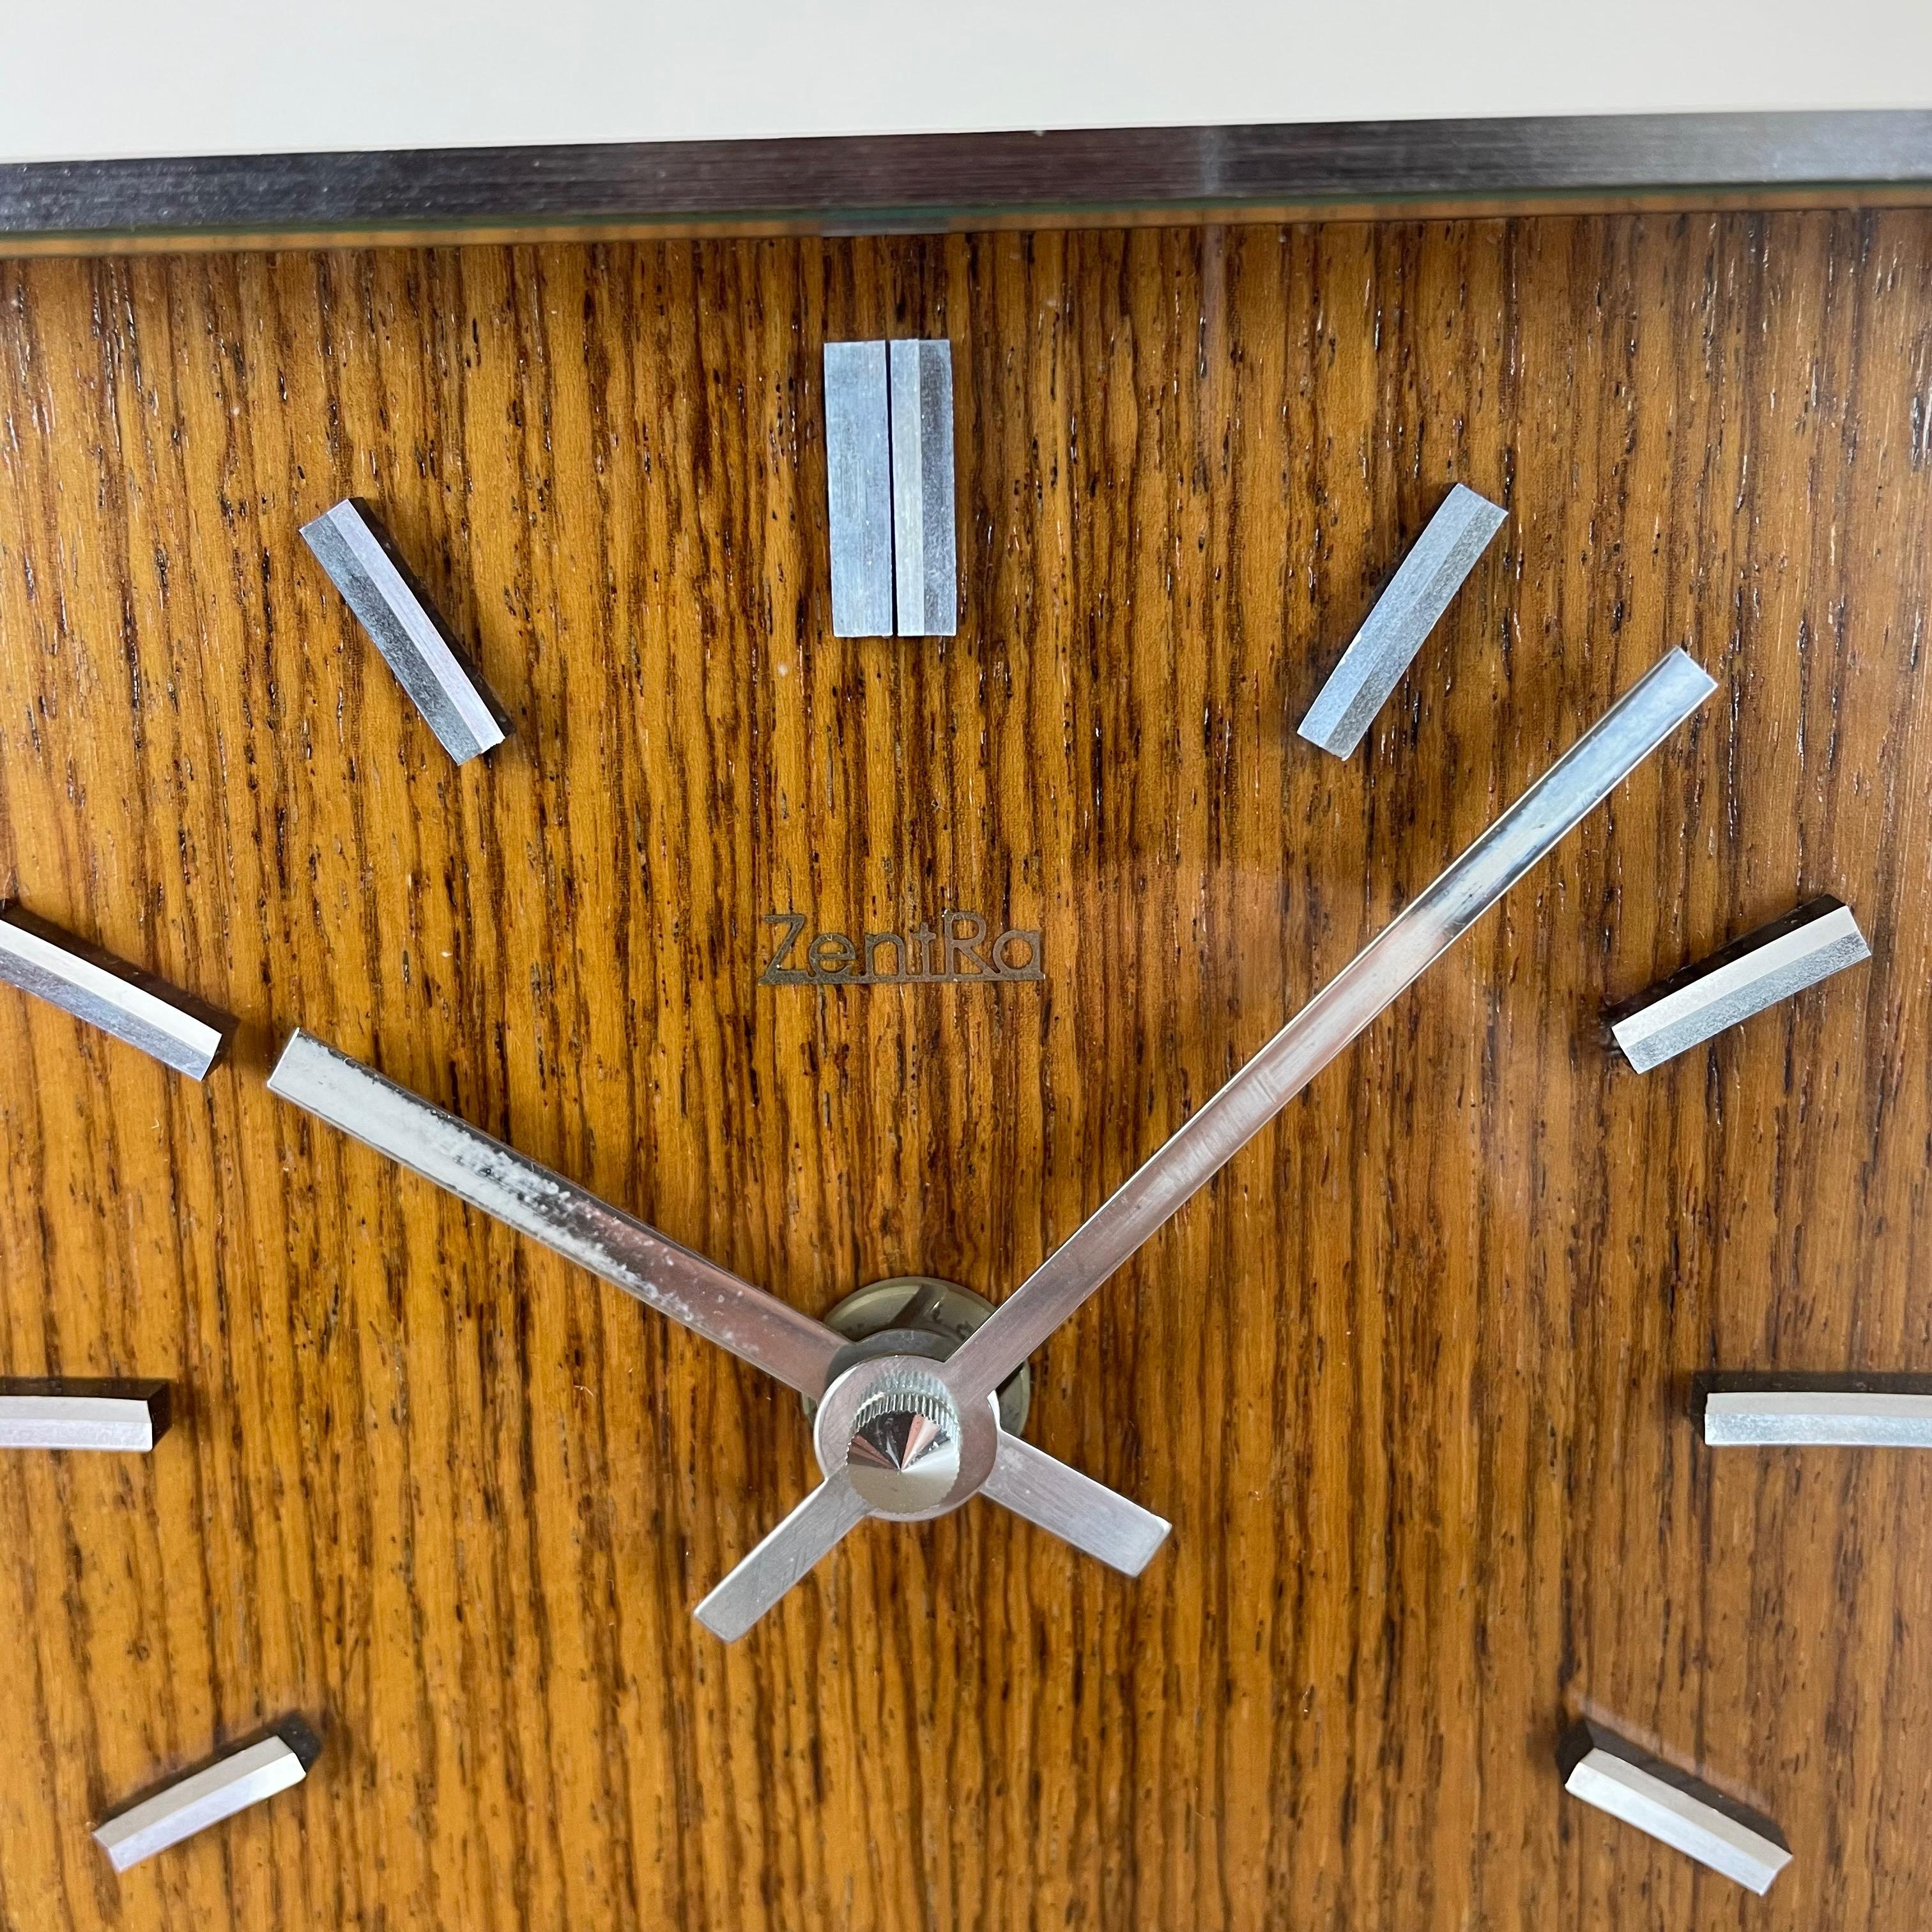 Vintage Modernist Wooden Teak Metal Table Clock by Zentra, Germany 1970s For Sale 1